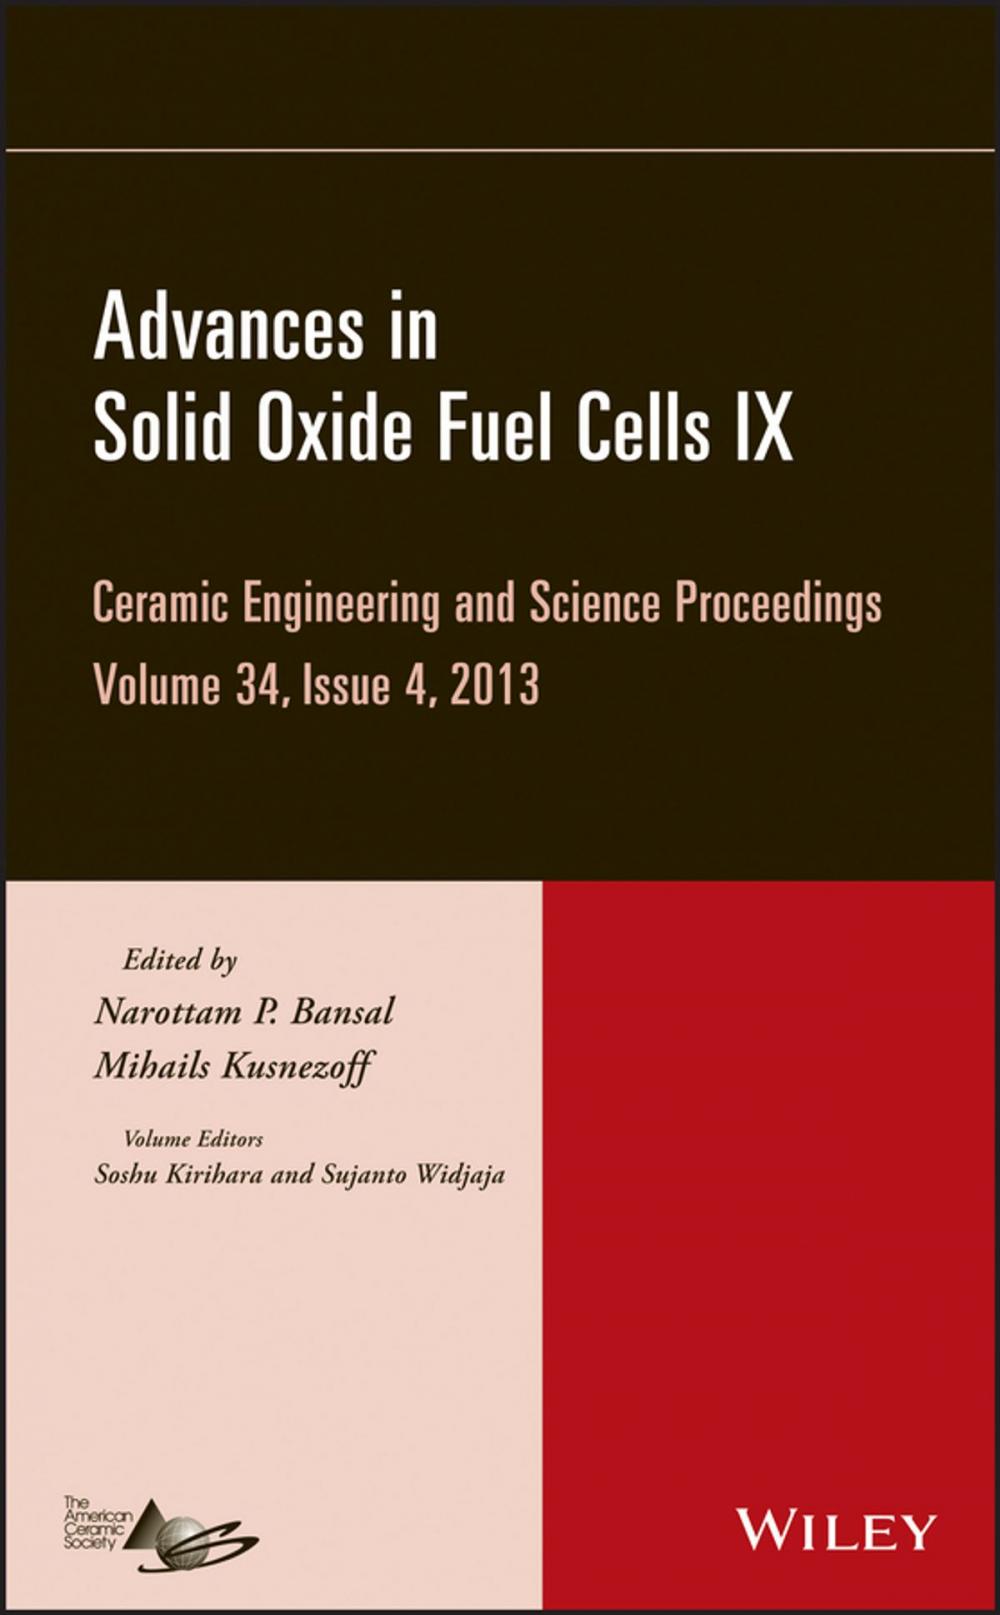 Big bigCover of Advances in Solid Oxide Fuel Cells IX